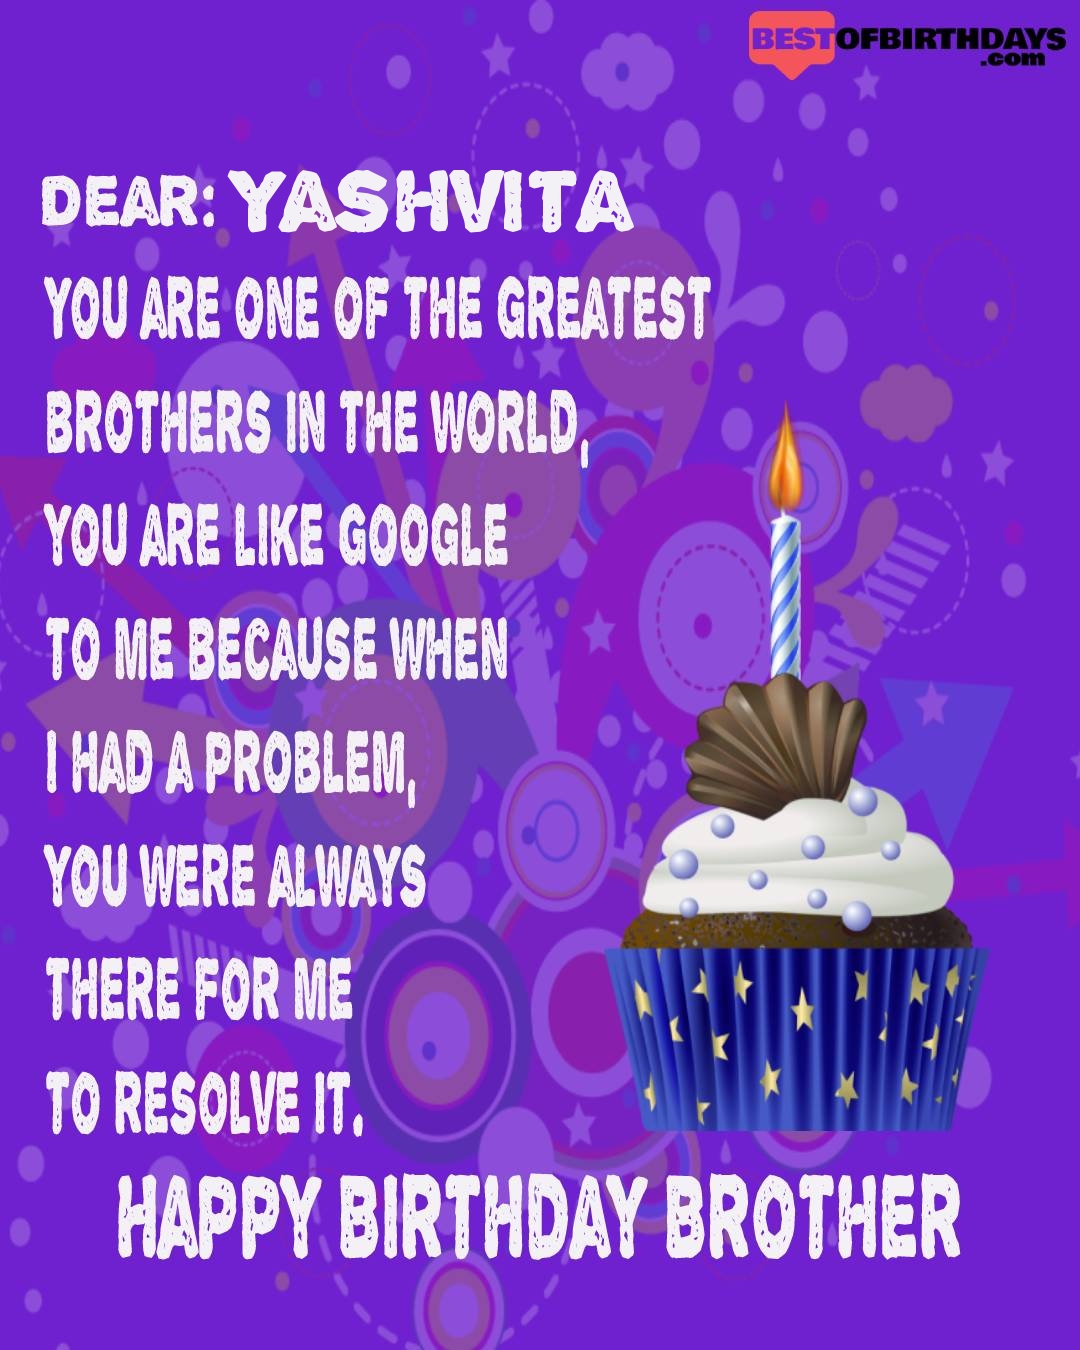 Happy birthday yashvita bhai brother bro